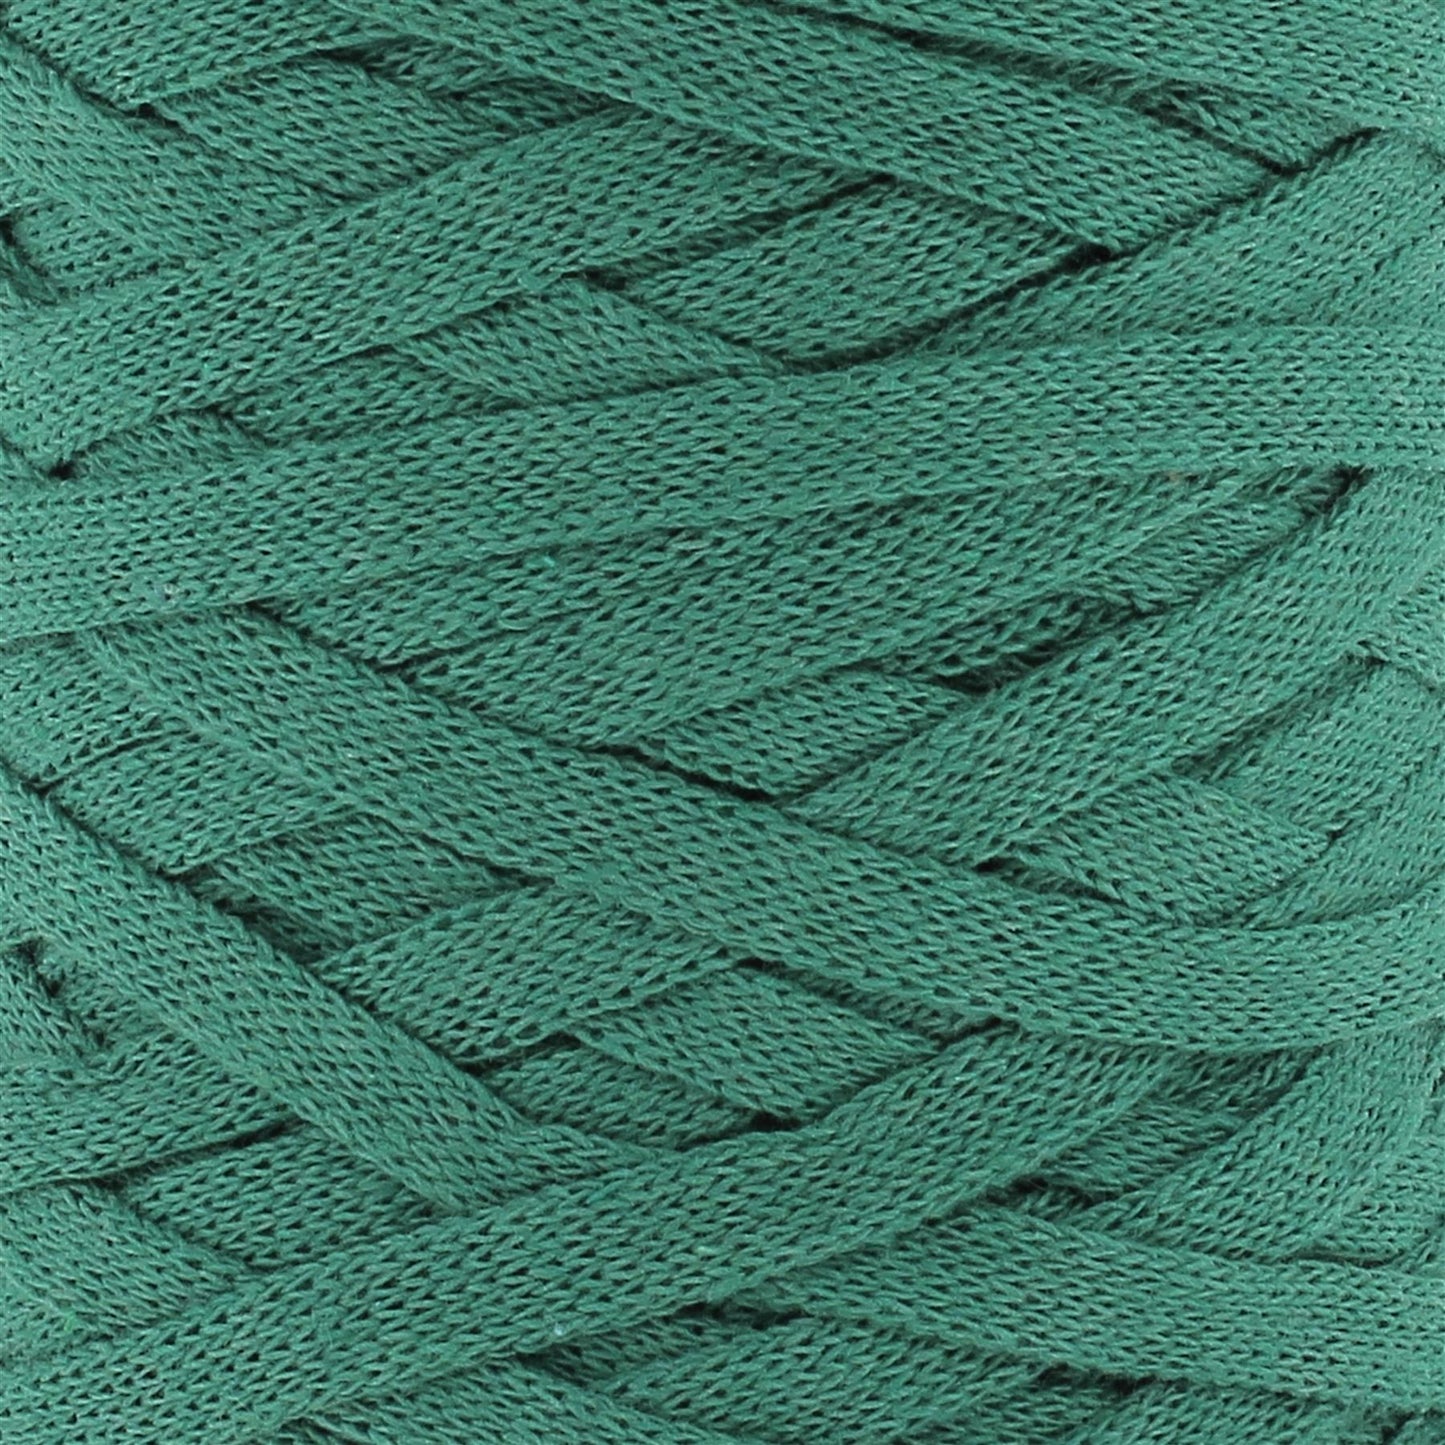 RXL52 RibbonXL Lush Green Cotton Yarn - 120M, 250g